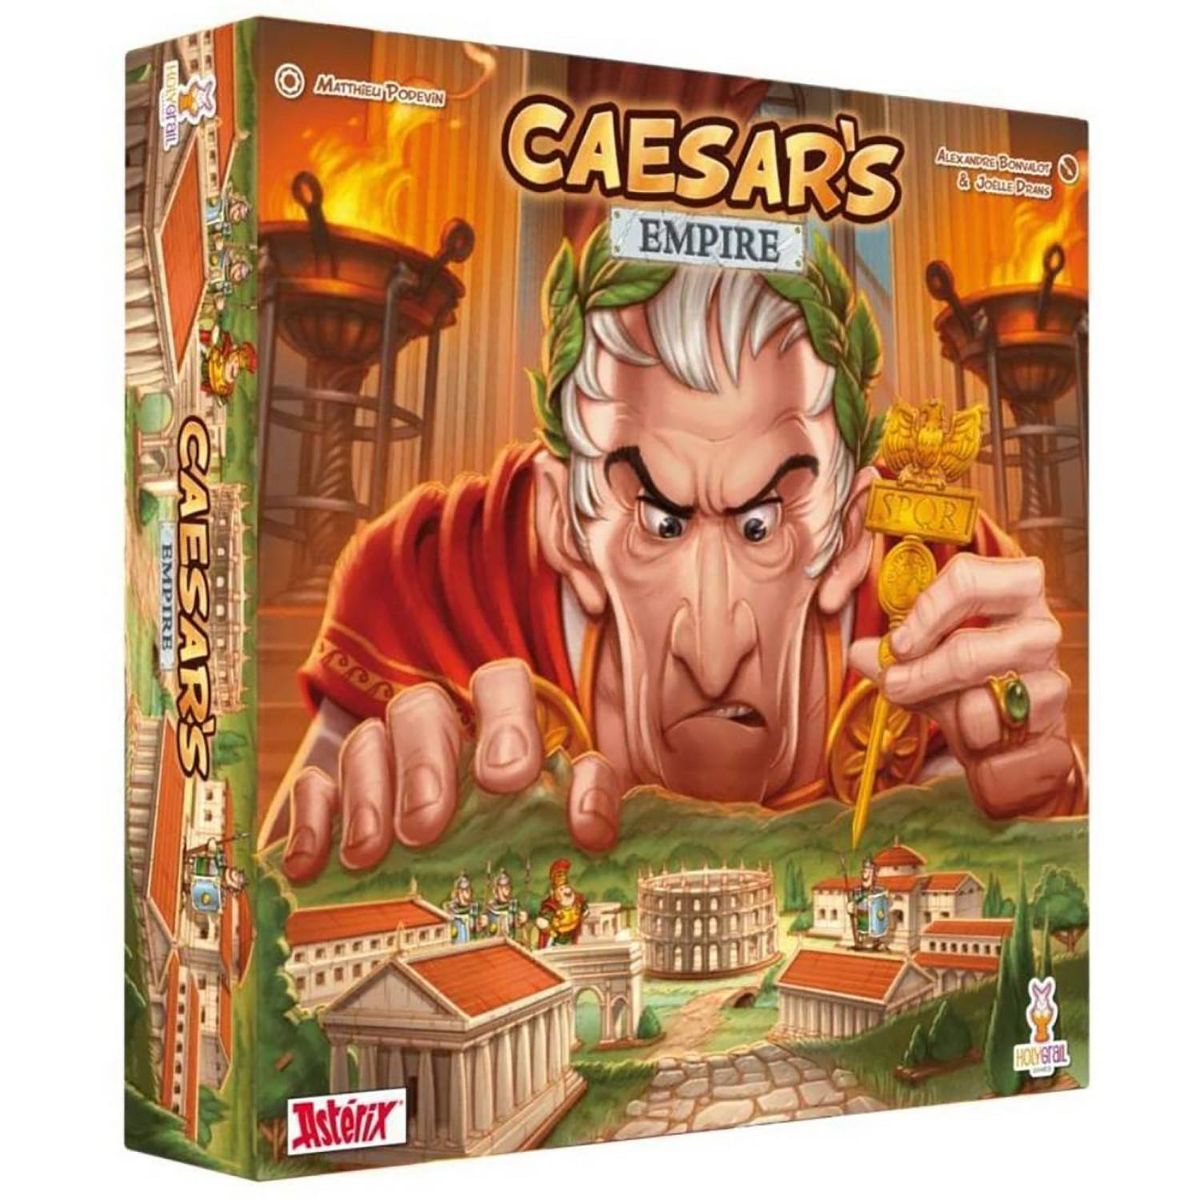 Caesars Empire Game | Target